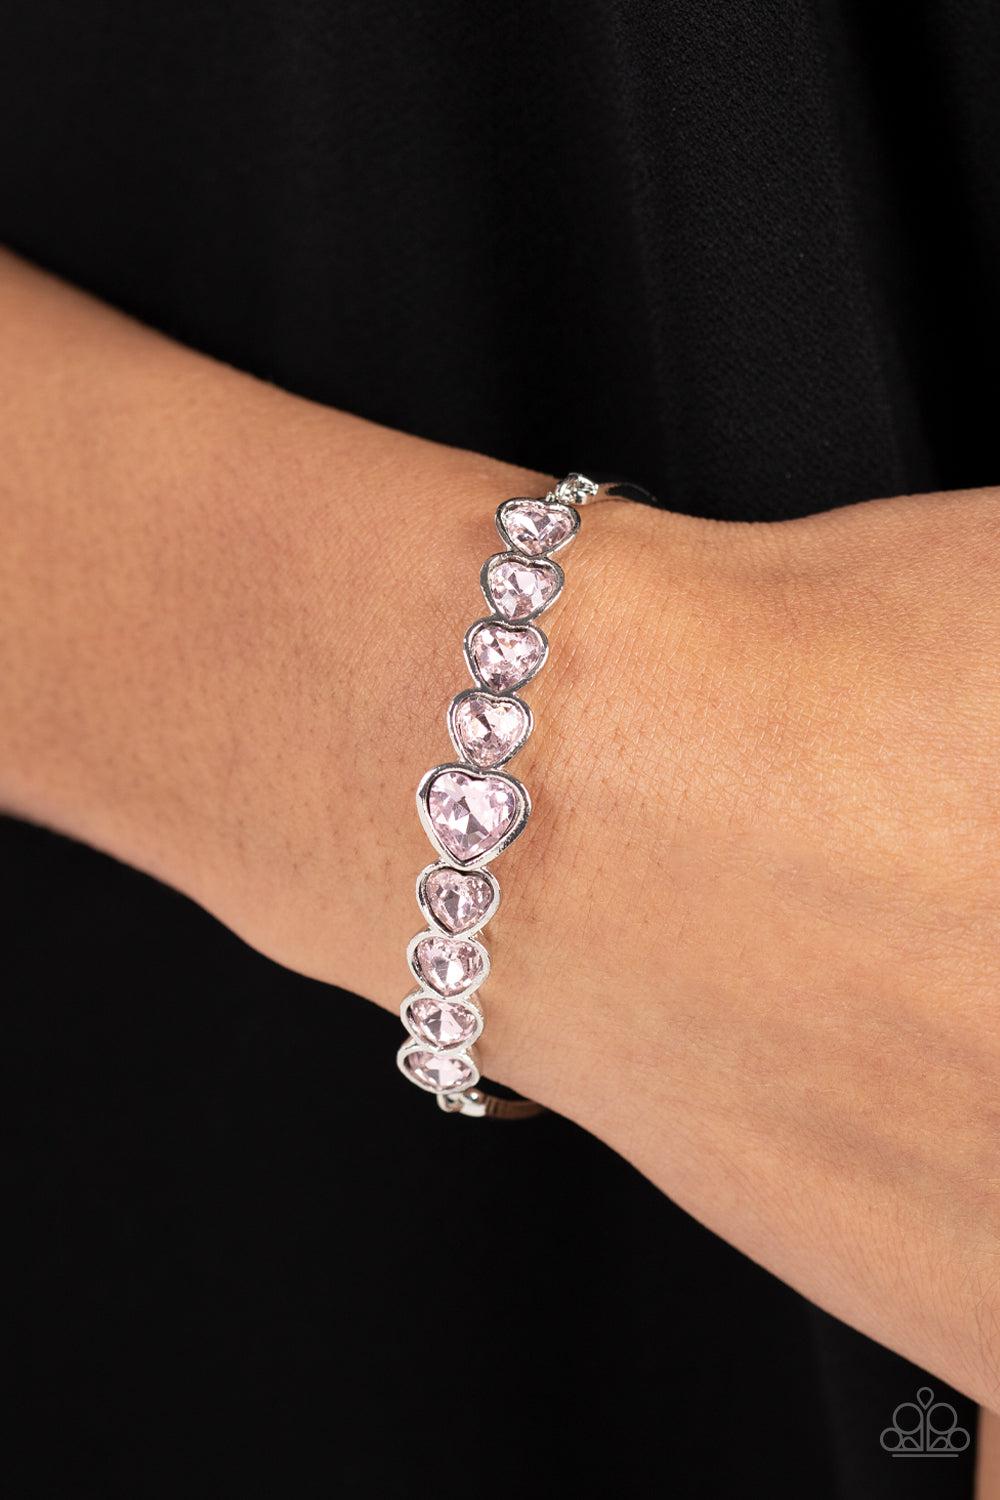 Lusty Luster Pink Rhinestone Heart Bracelet - Paparazzi Accessories- lightbox - CarasShop.com - $5 Jewelry by Cara Jewels